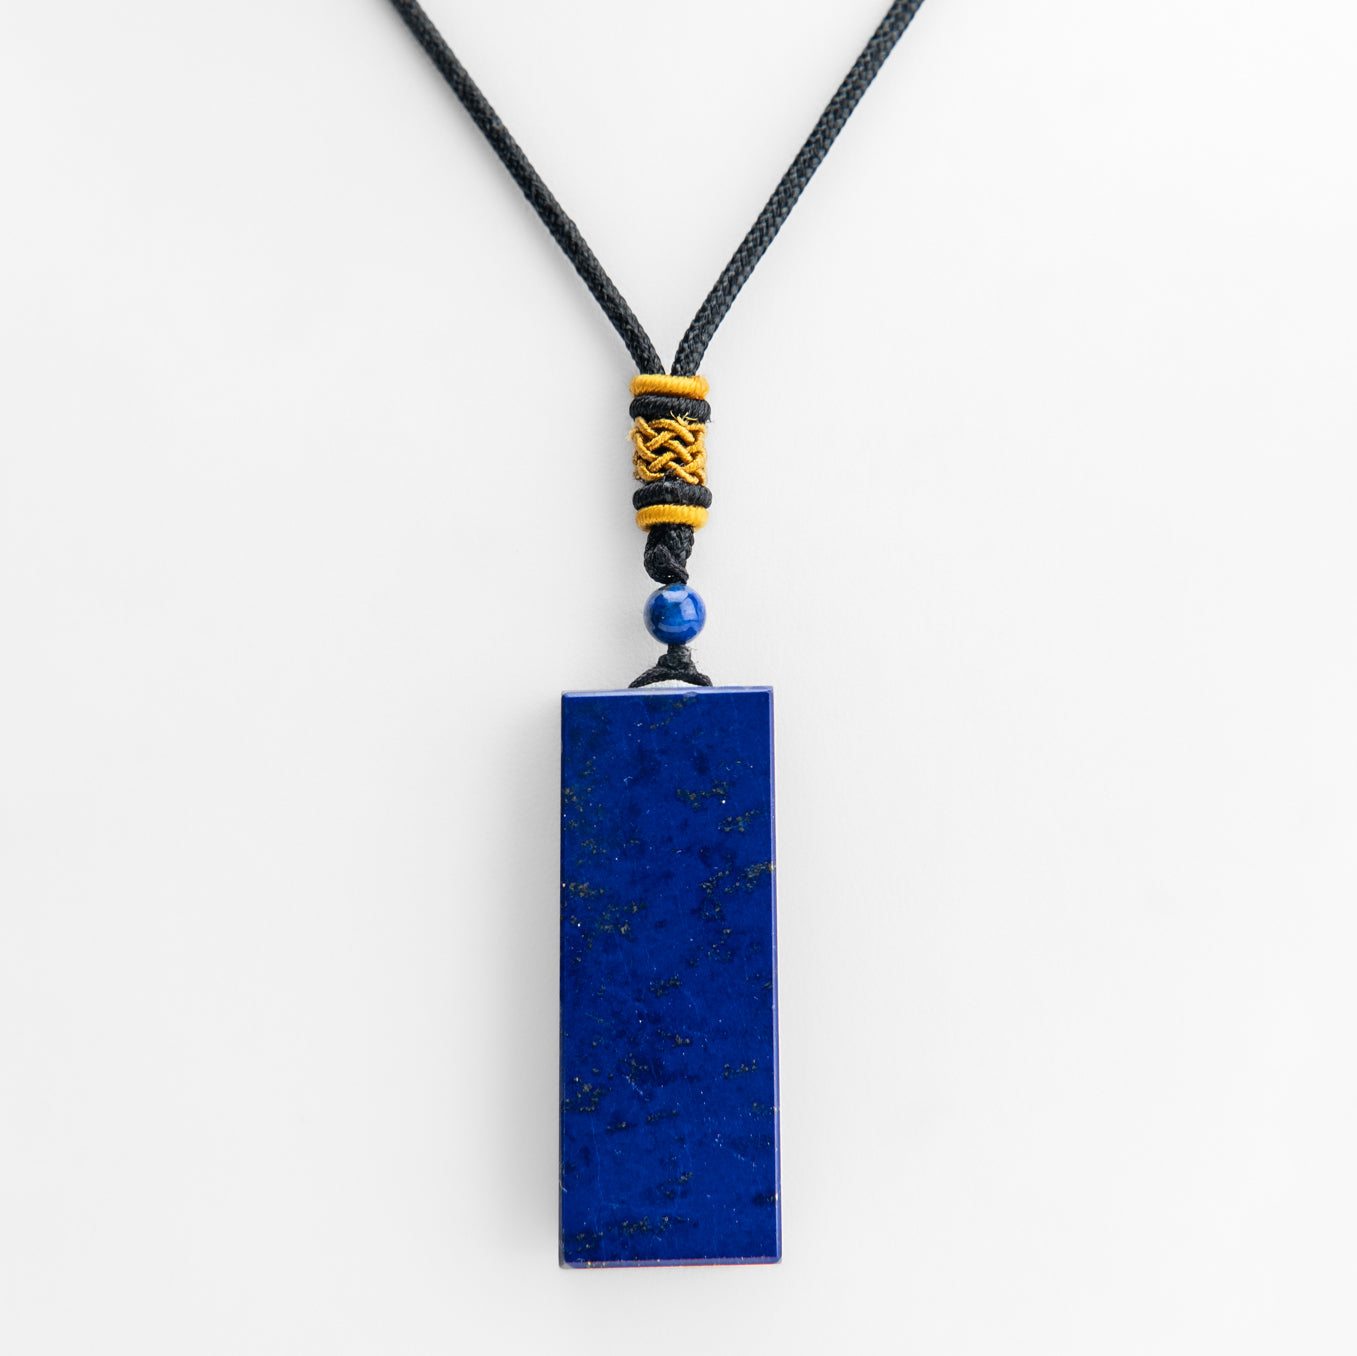 Genuine Lapis Lazuli Pendant with Black Cord